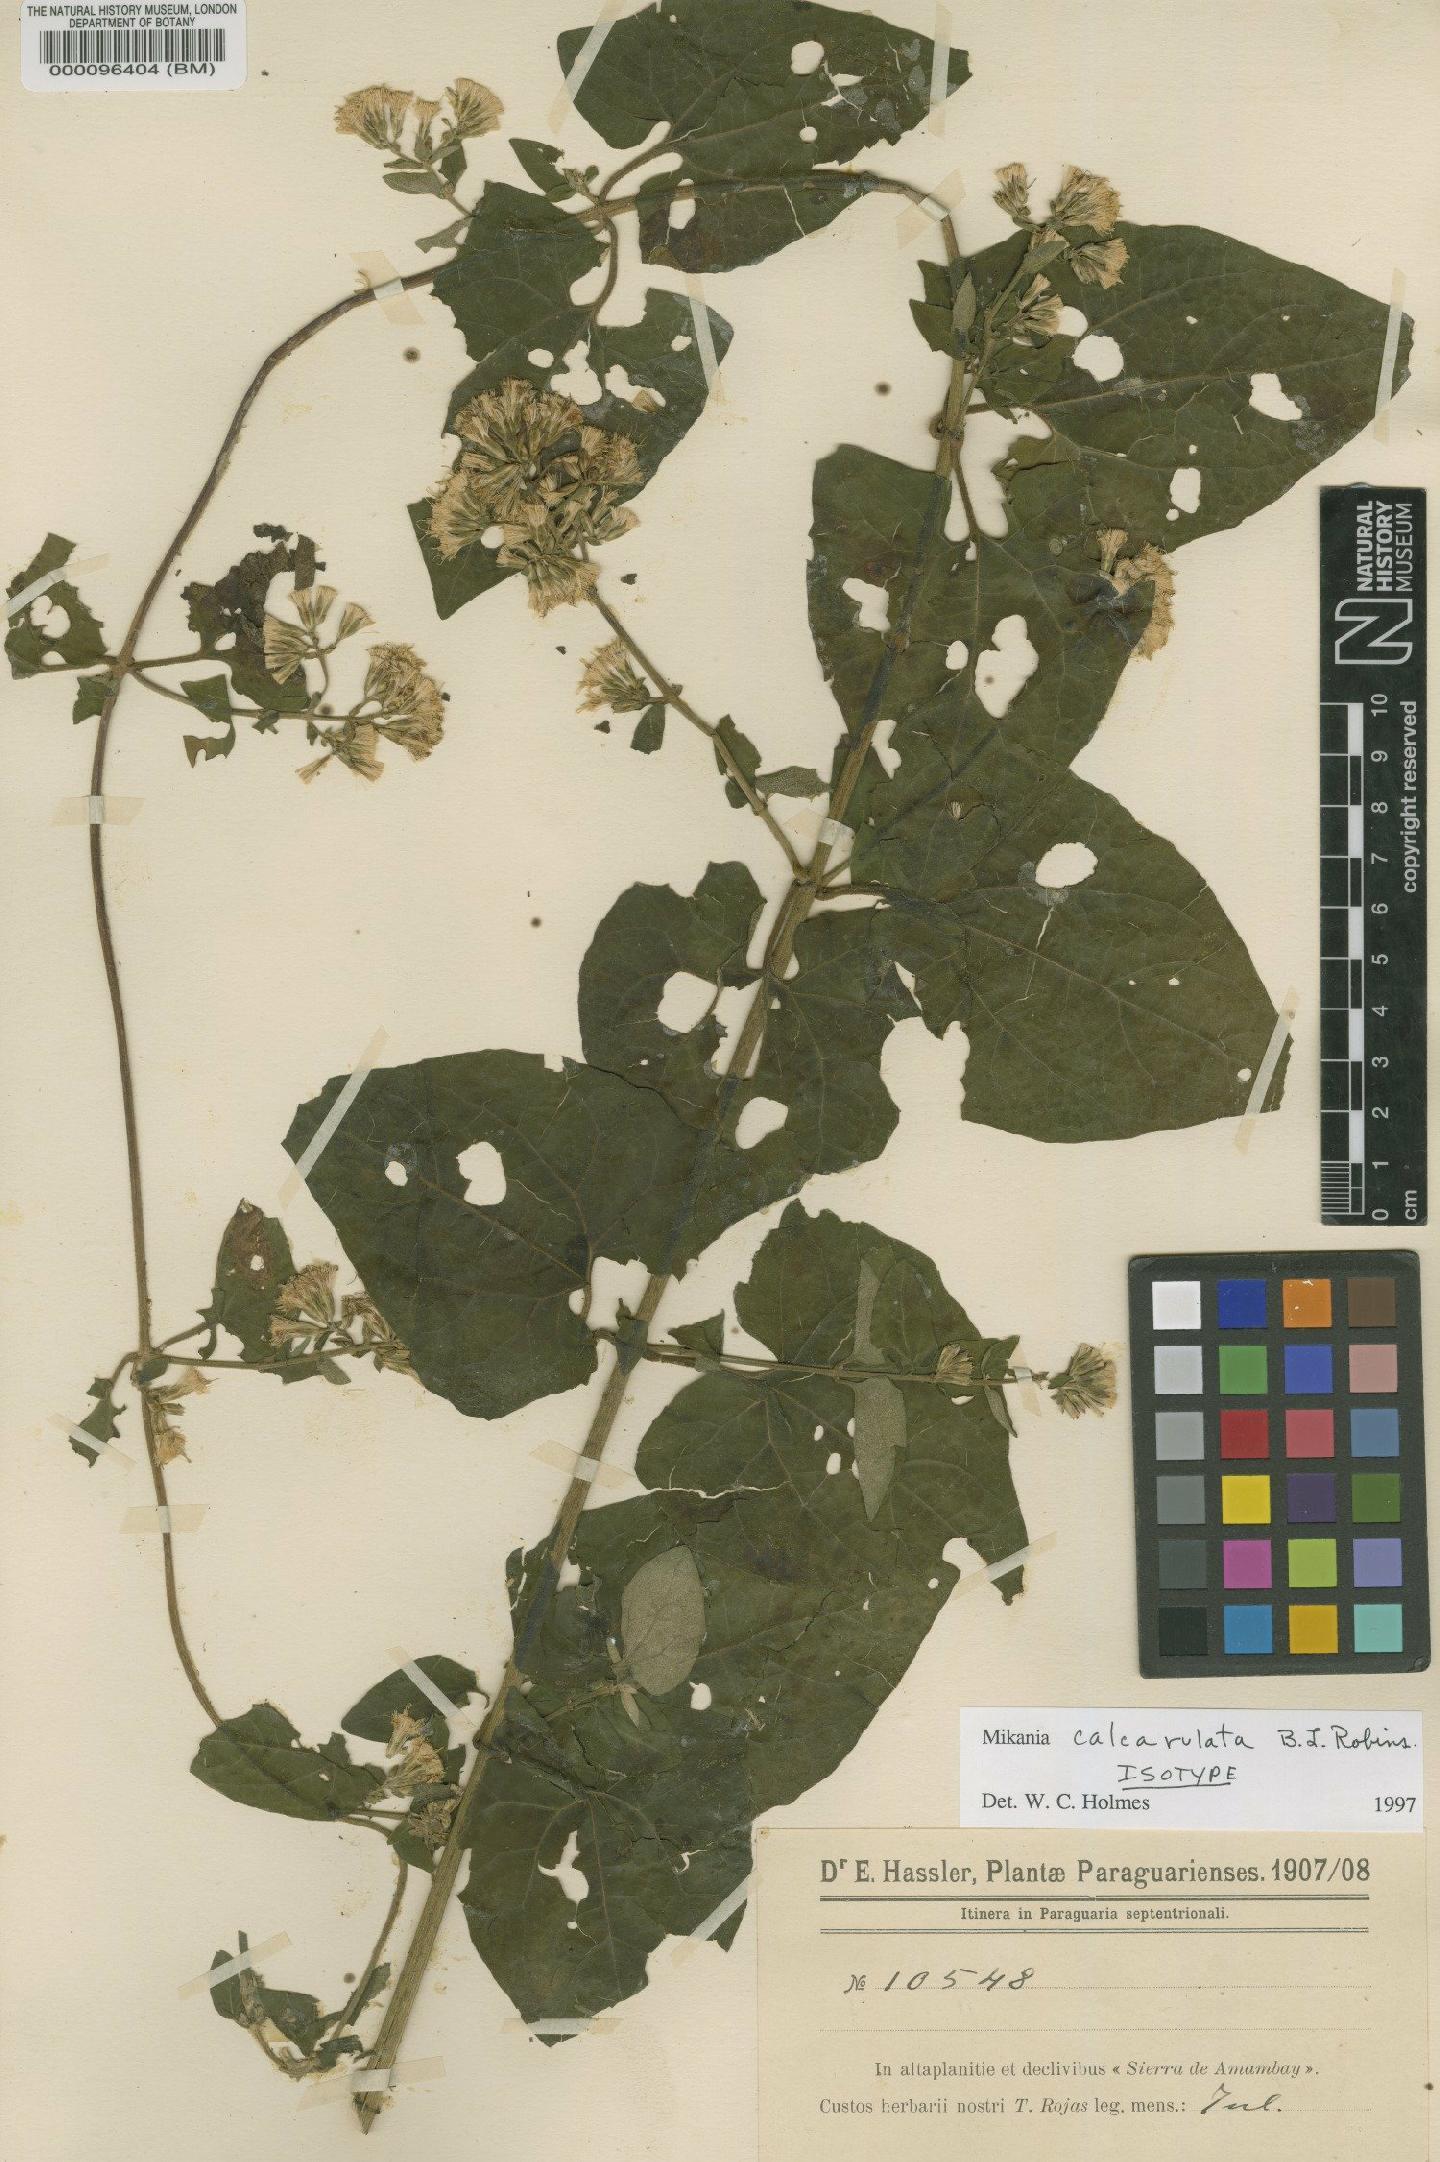 To NHMUK collection (Mikania calcarulata B.L.Rob.; Isotype; NHMUK:ecatalogue:4567120)